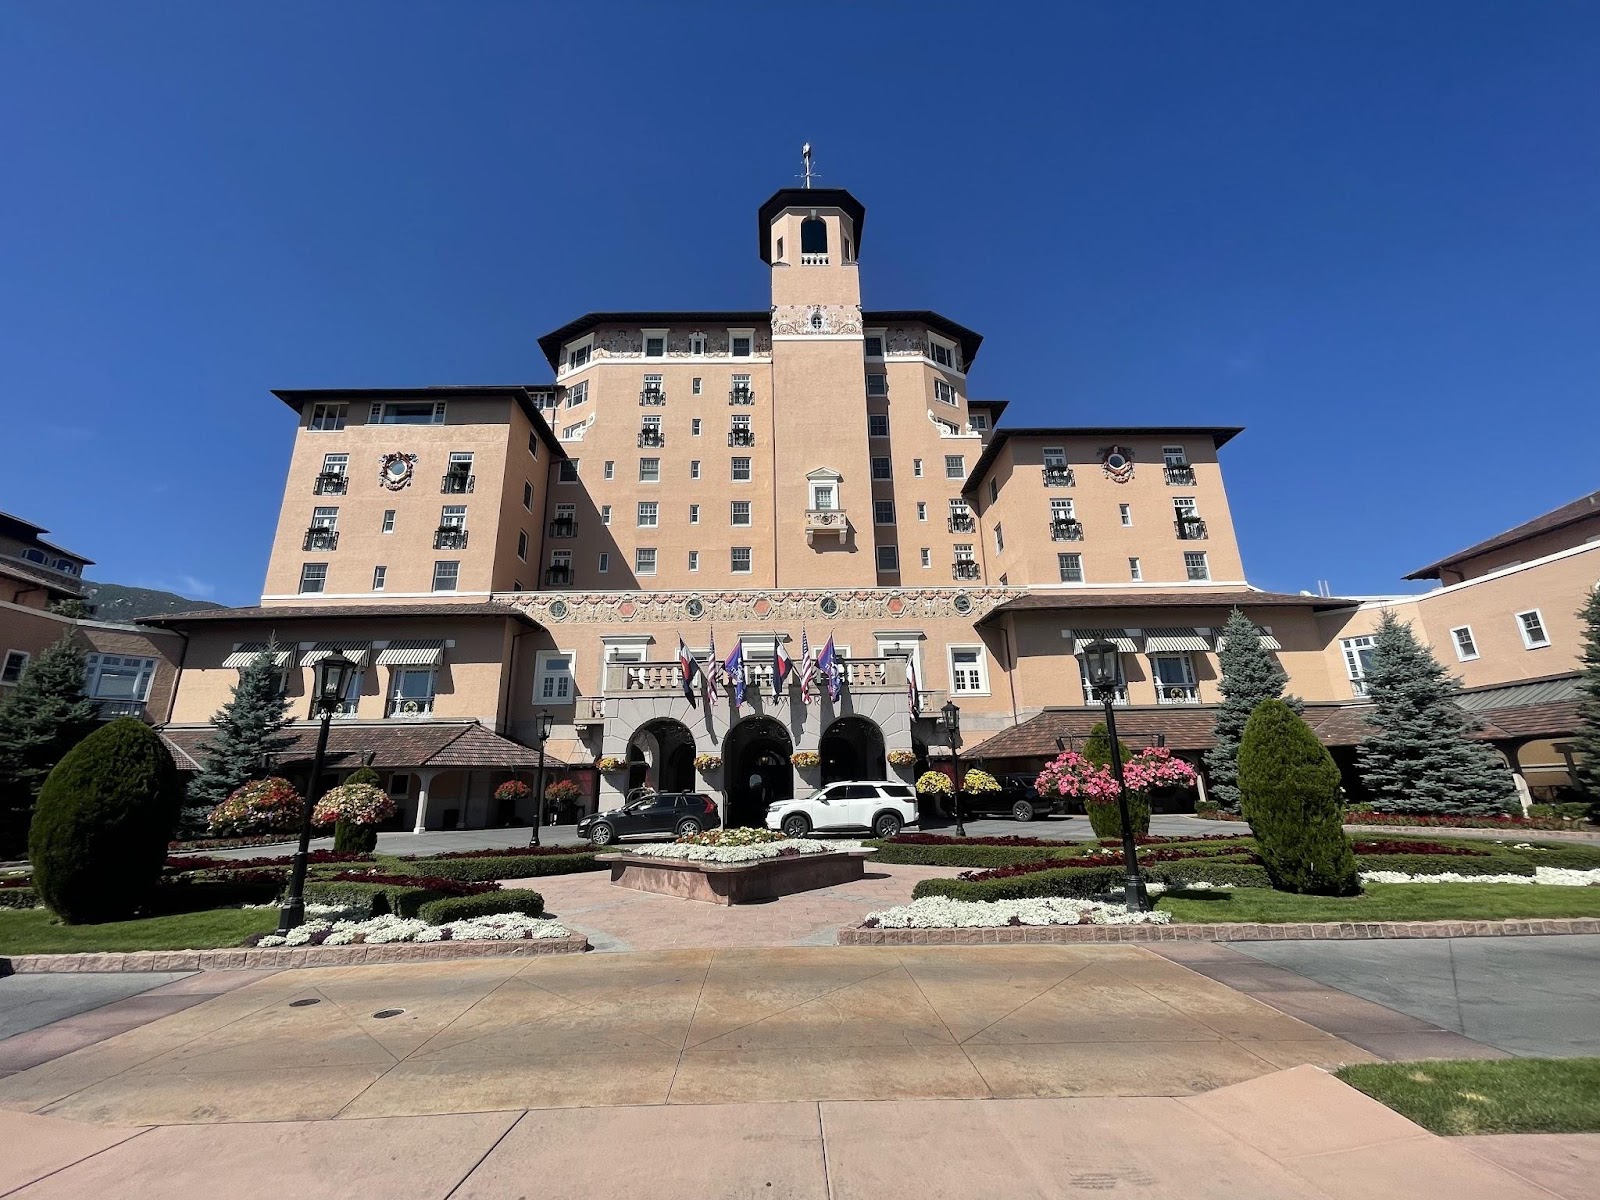 The Broadmoor Hotel